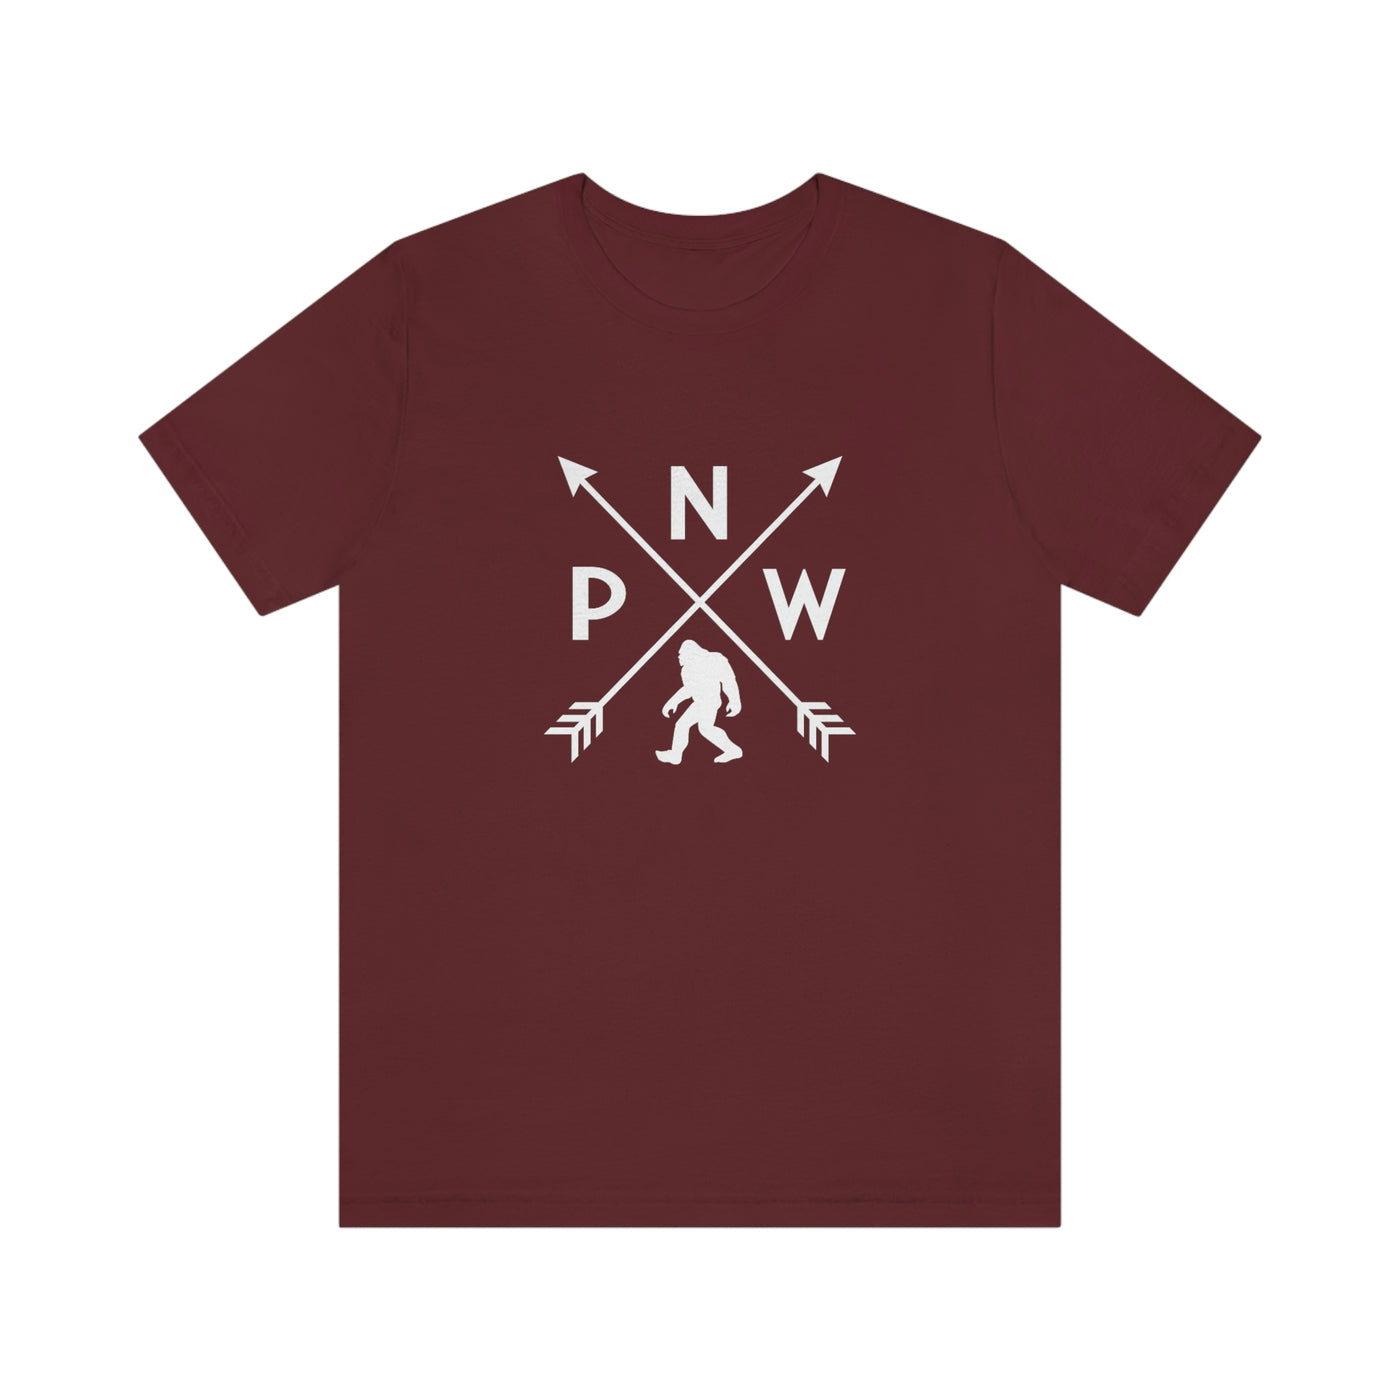 Wooden arrows PNG Designs for T Shirt & Merch